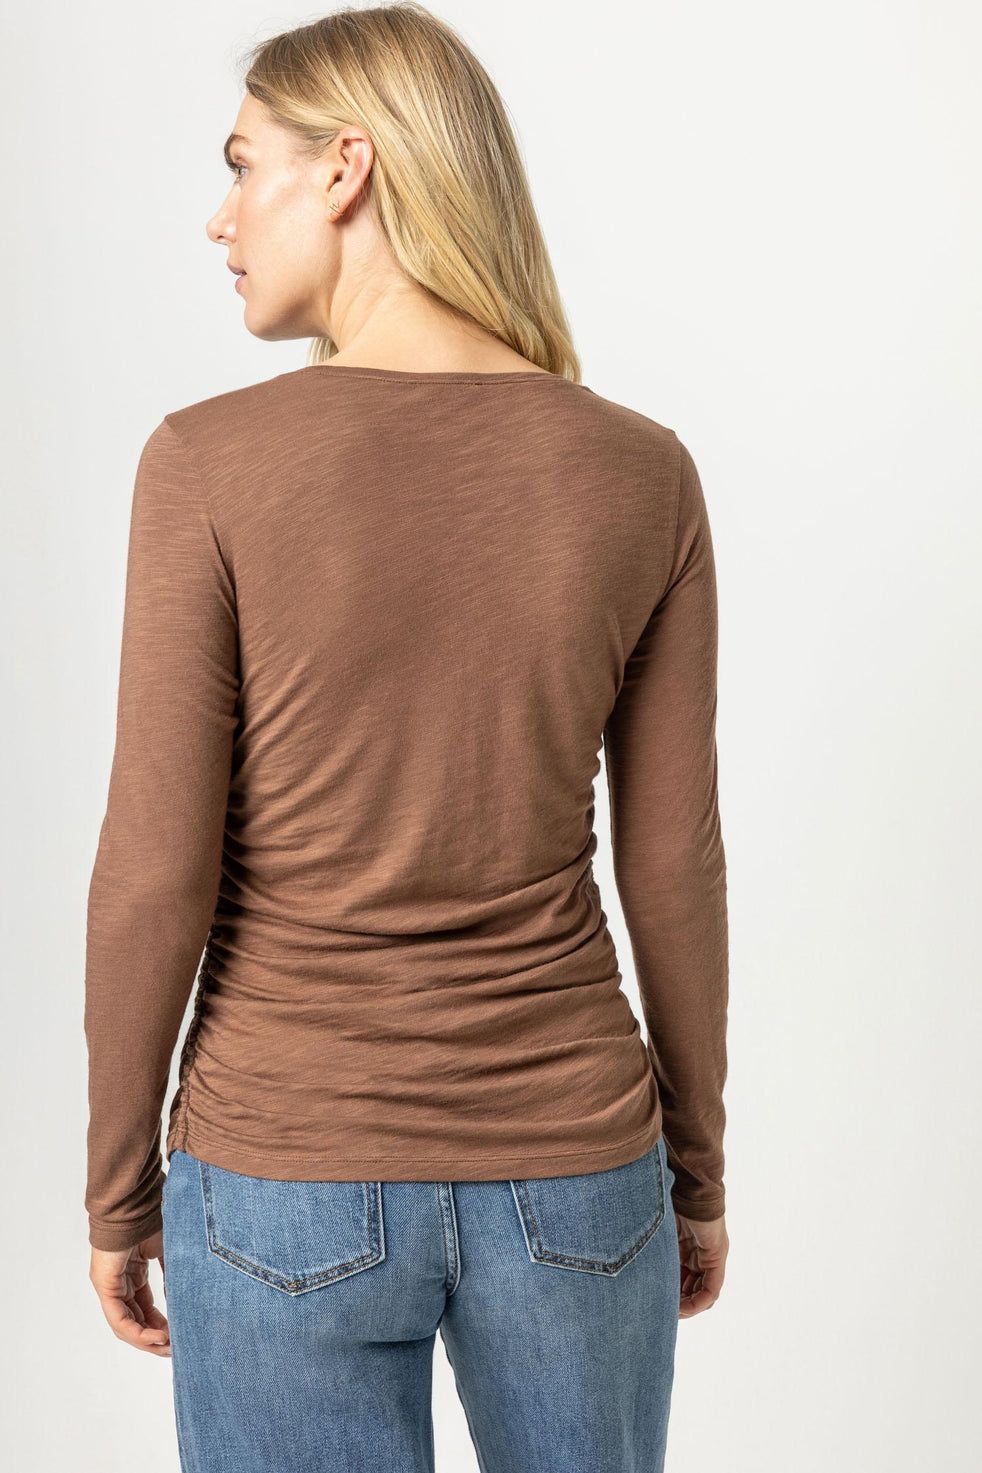 Short Sleeve Tops for Long & Cotton Sale Women Shirts on | Women\'s